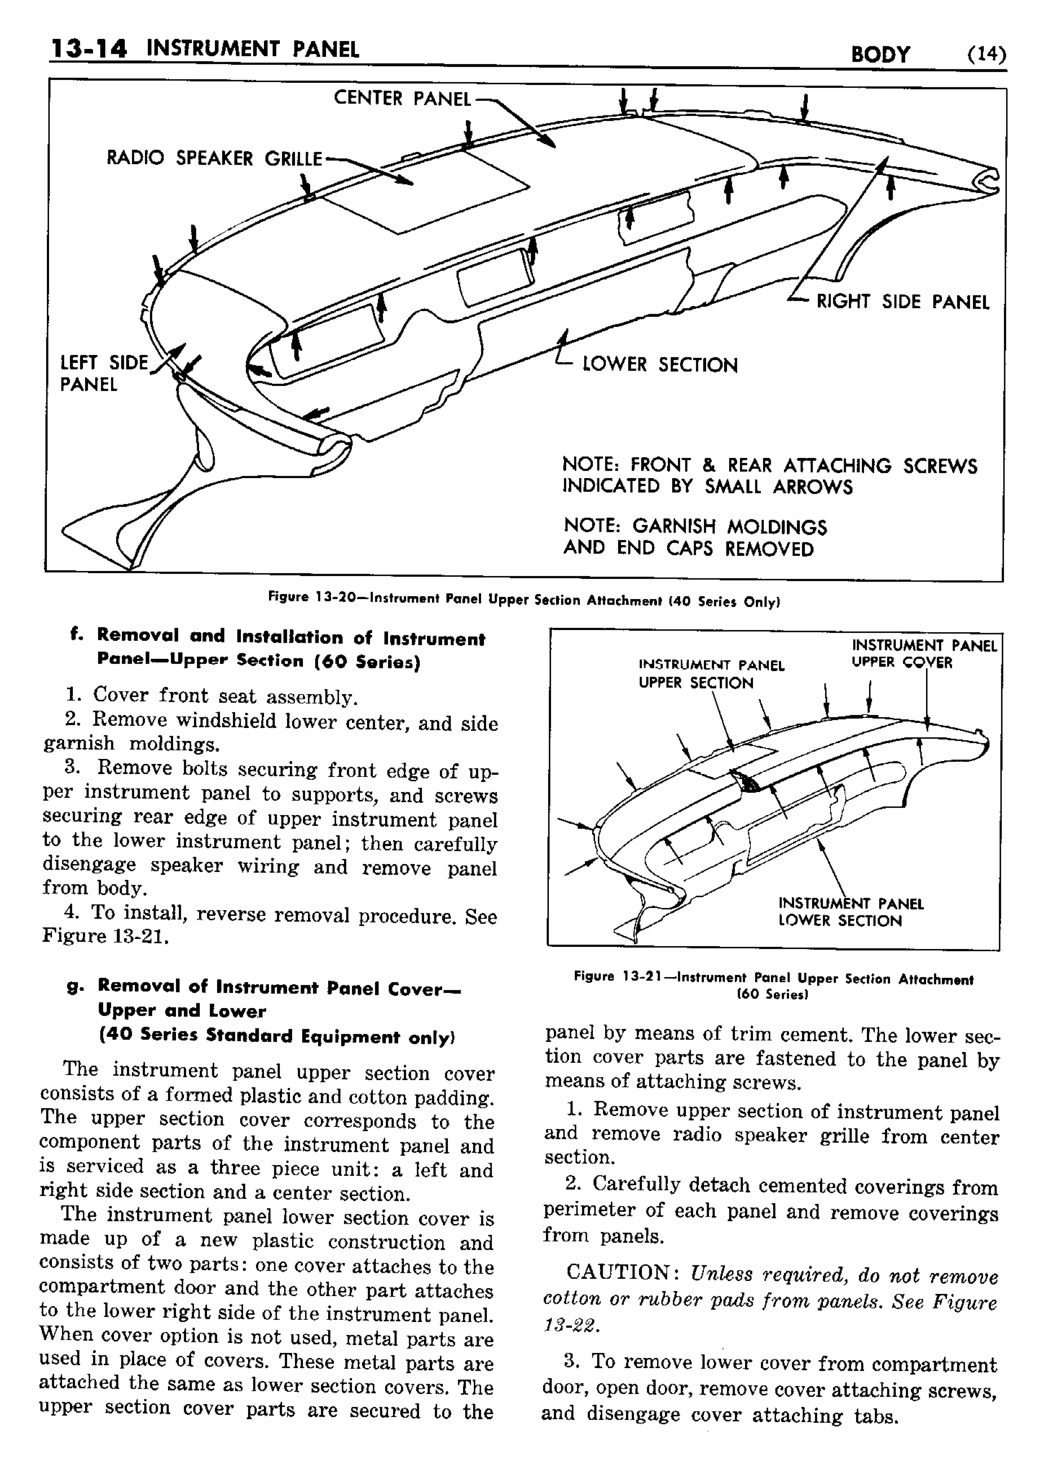 n_1958 Buick Body Service Manual-015-015.jpg